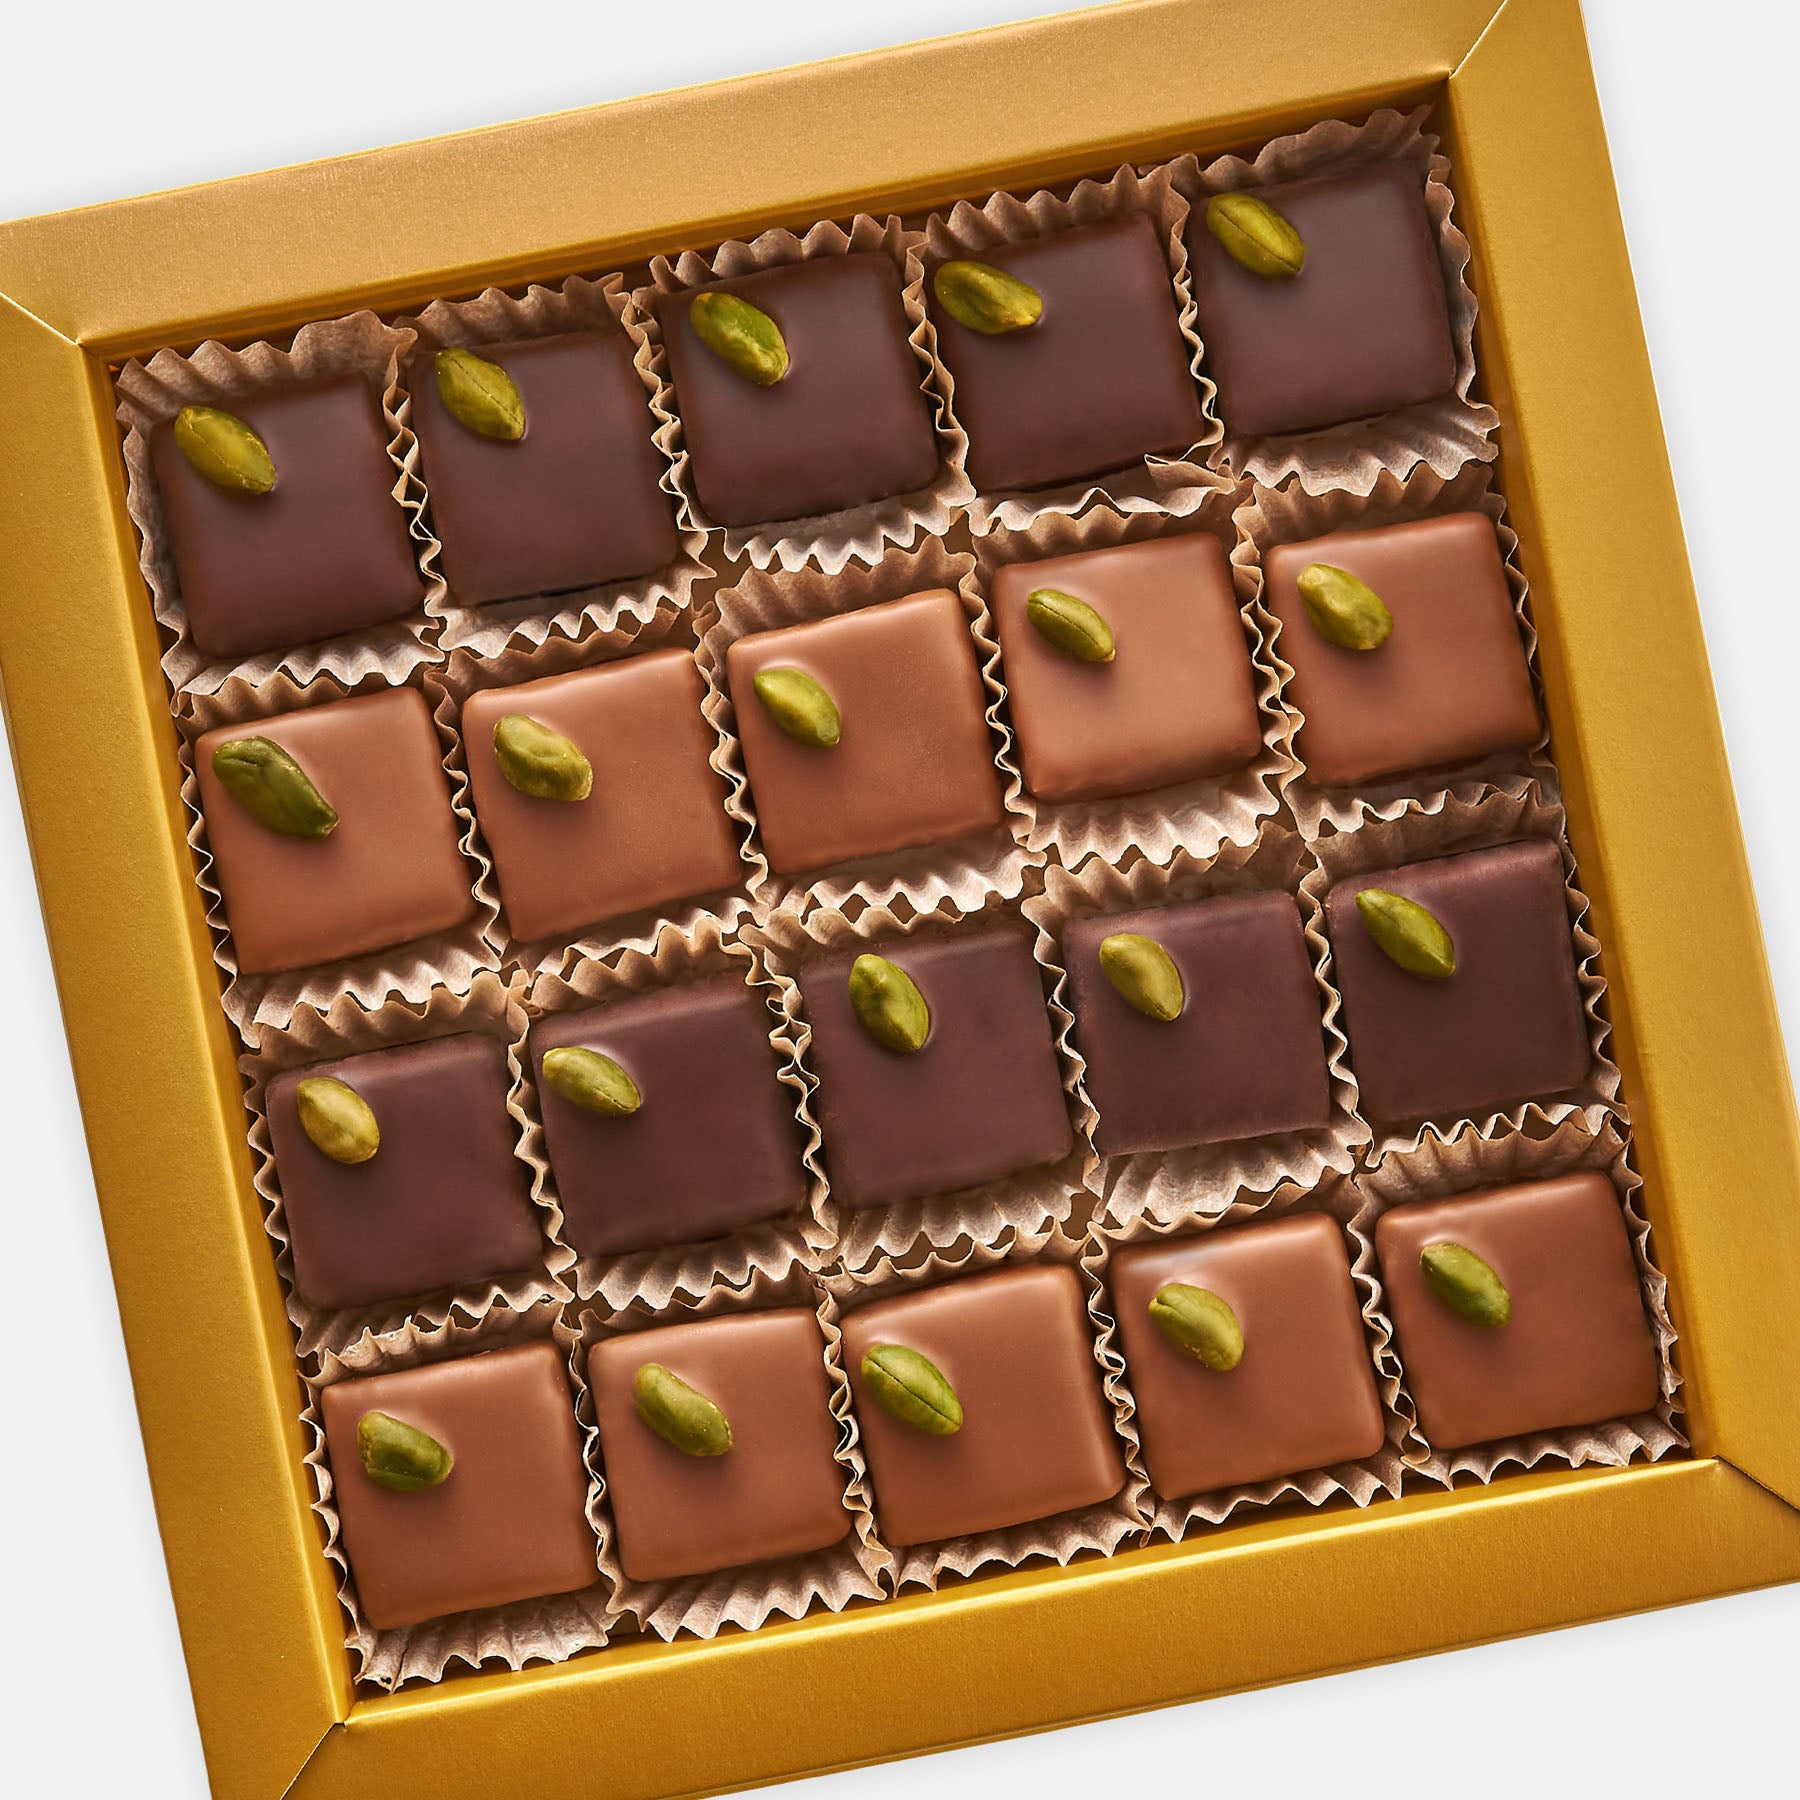 12 Bâtonnets chocolat/pistache (La balade gourmande, boîte 424g)